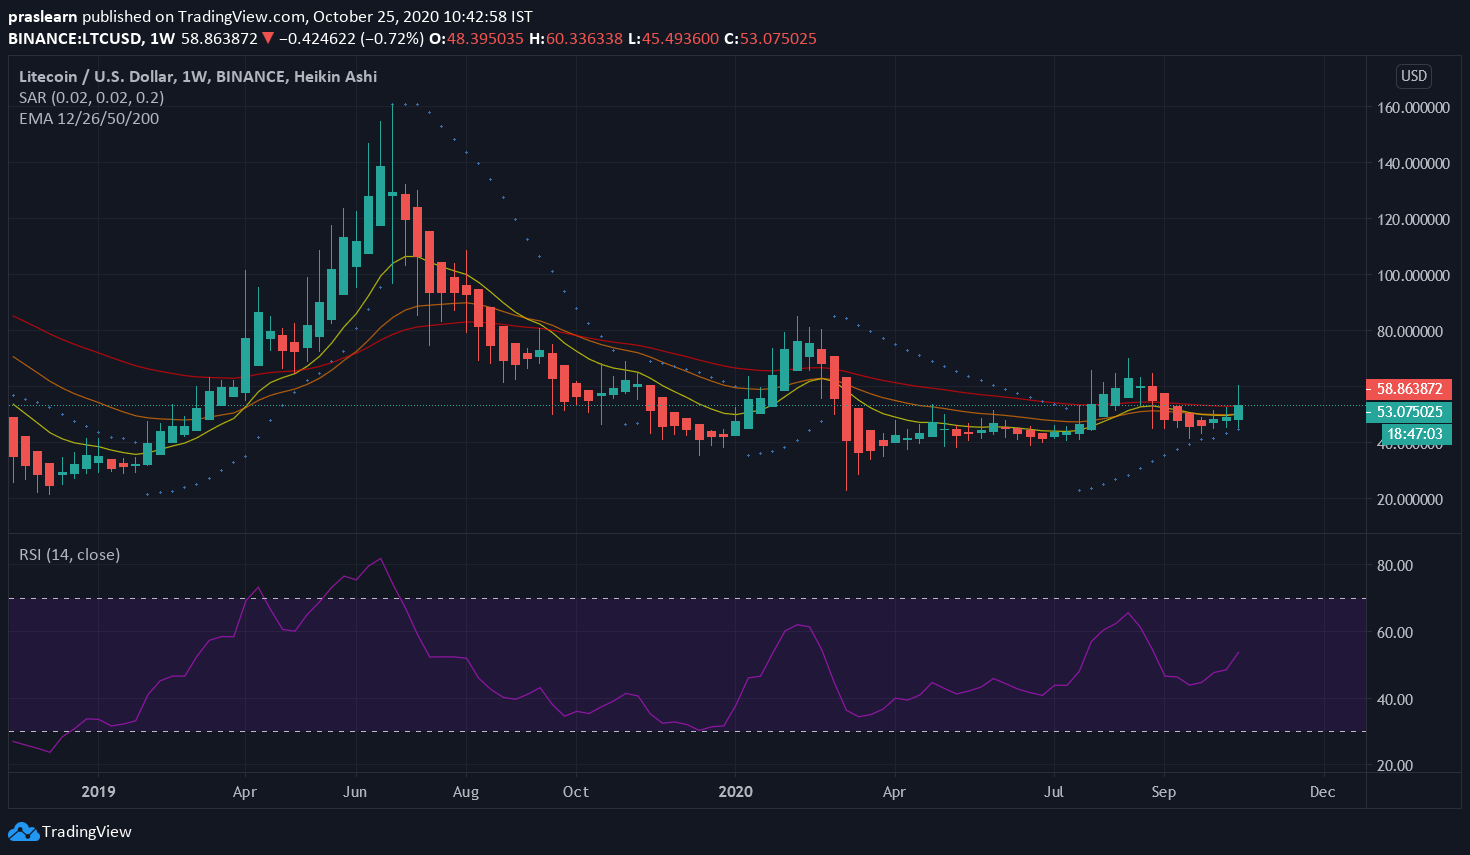 LTC/USD Weekly Chart: Tradingview